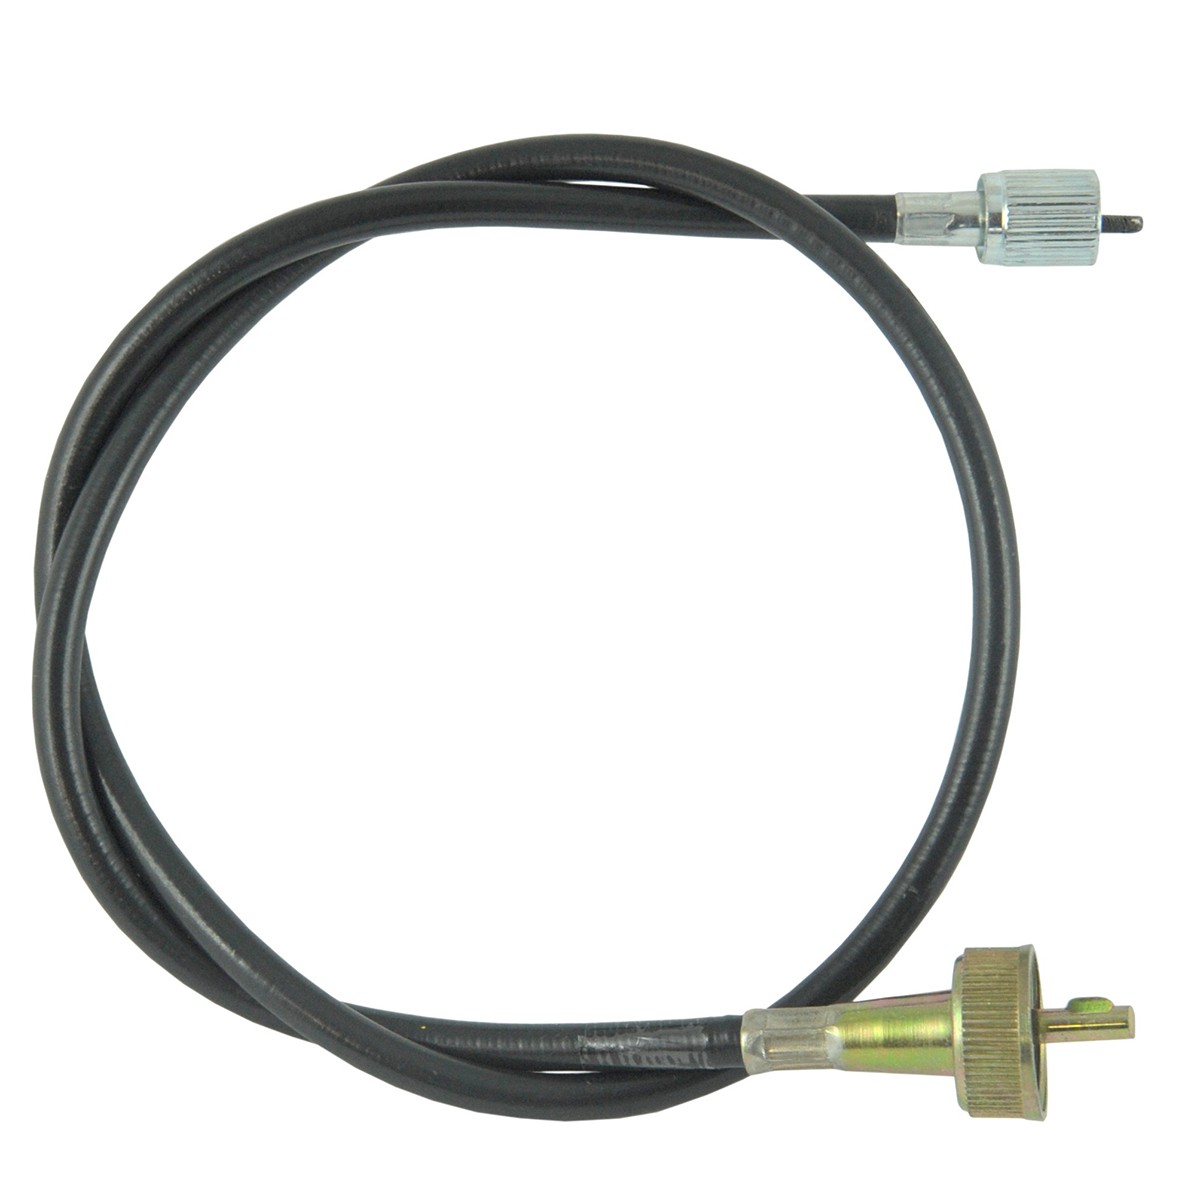 Counter cable / 825 mm / Iseki TE/TL/TS/TU/TX / 1480-621-001-00 / 9-25-107-13